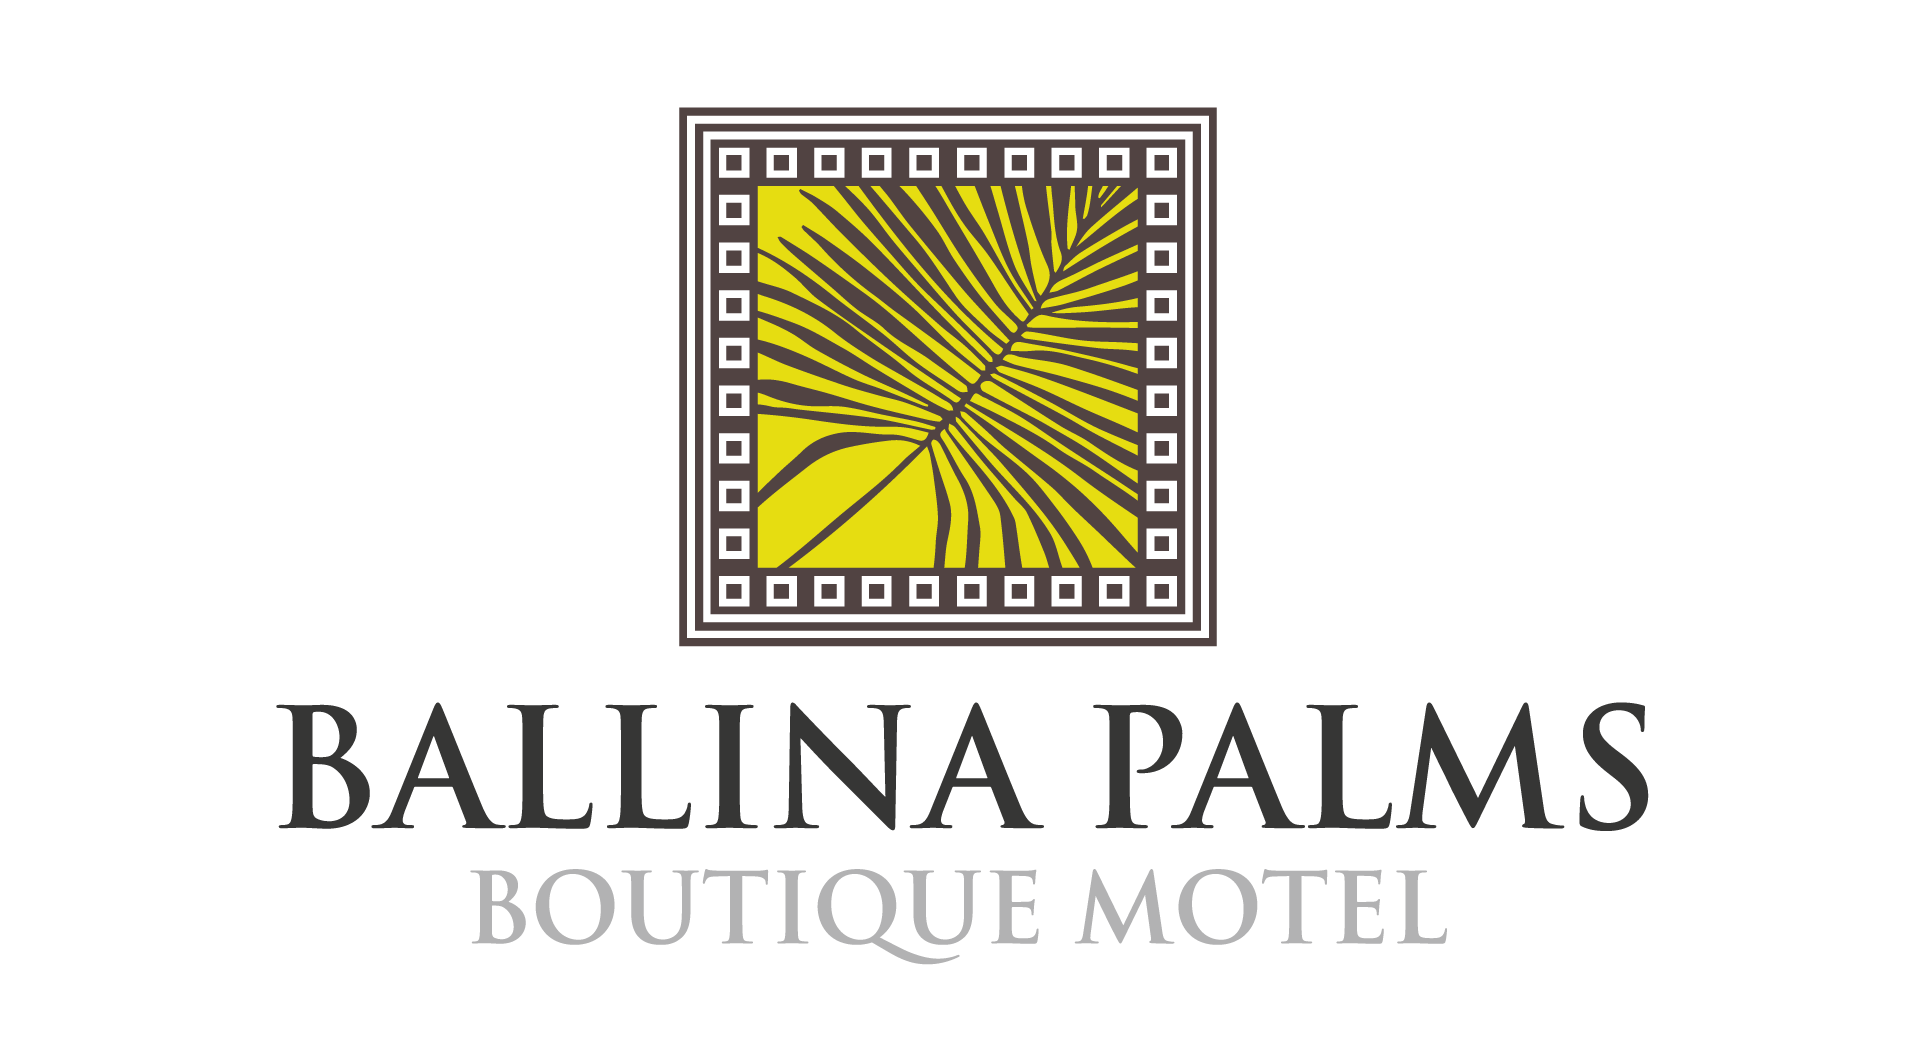 Ballina Palms Boutique Motel